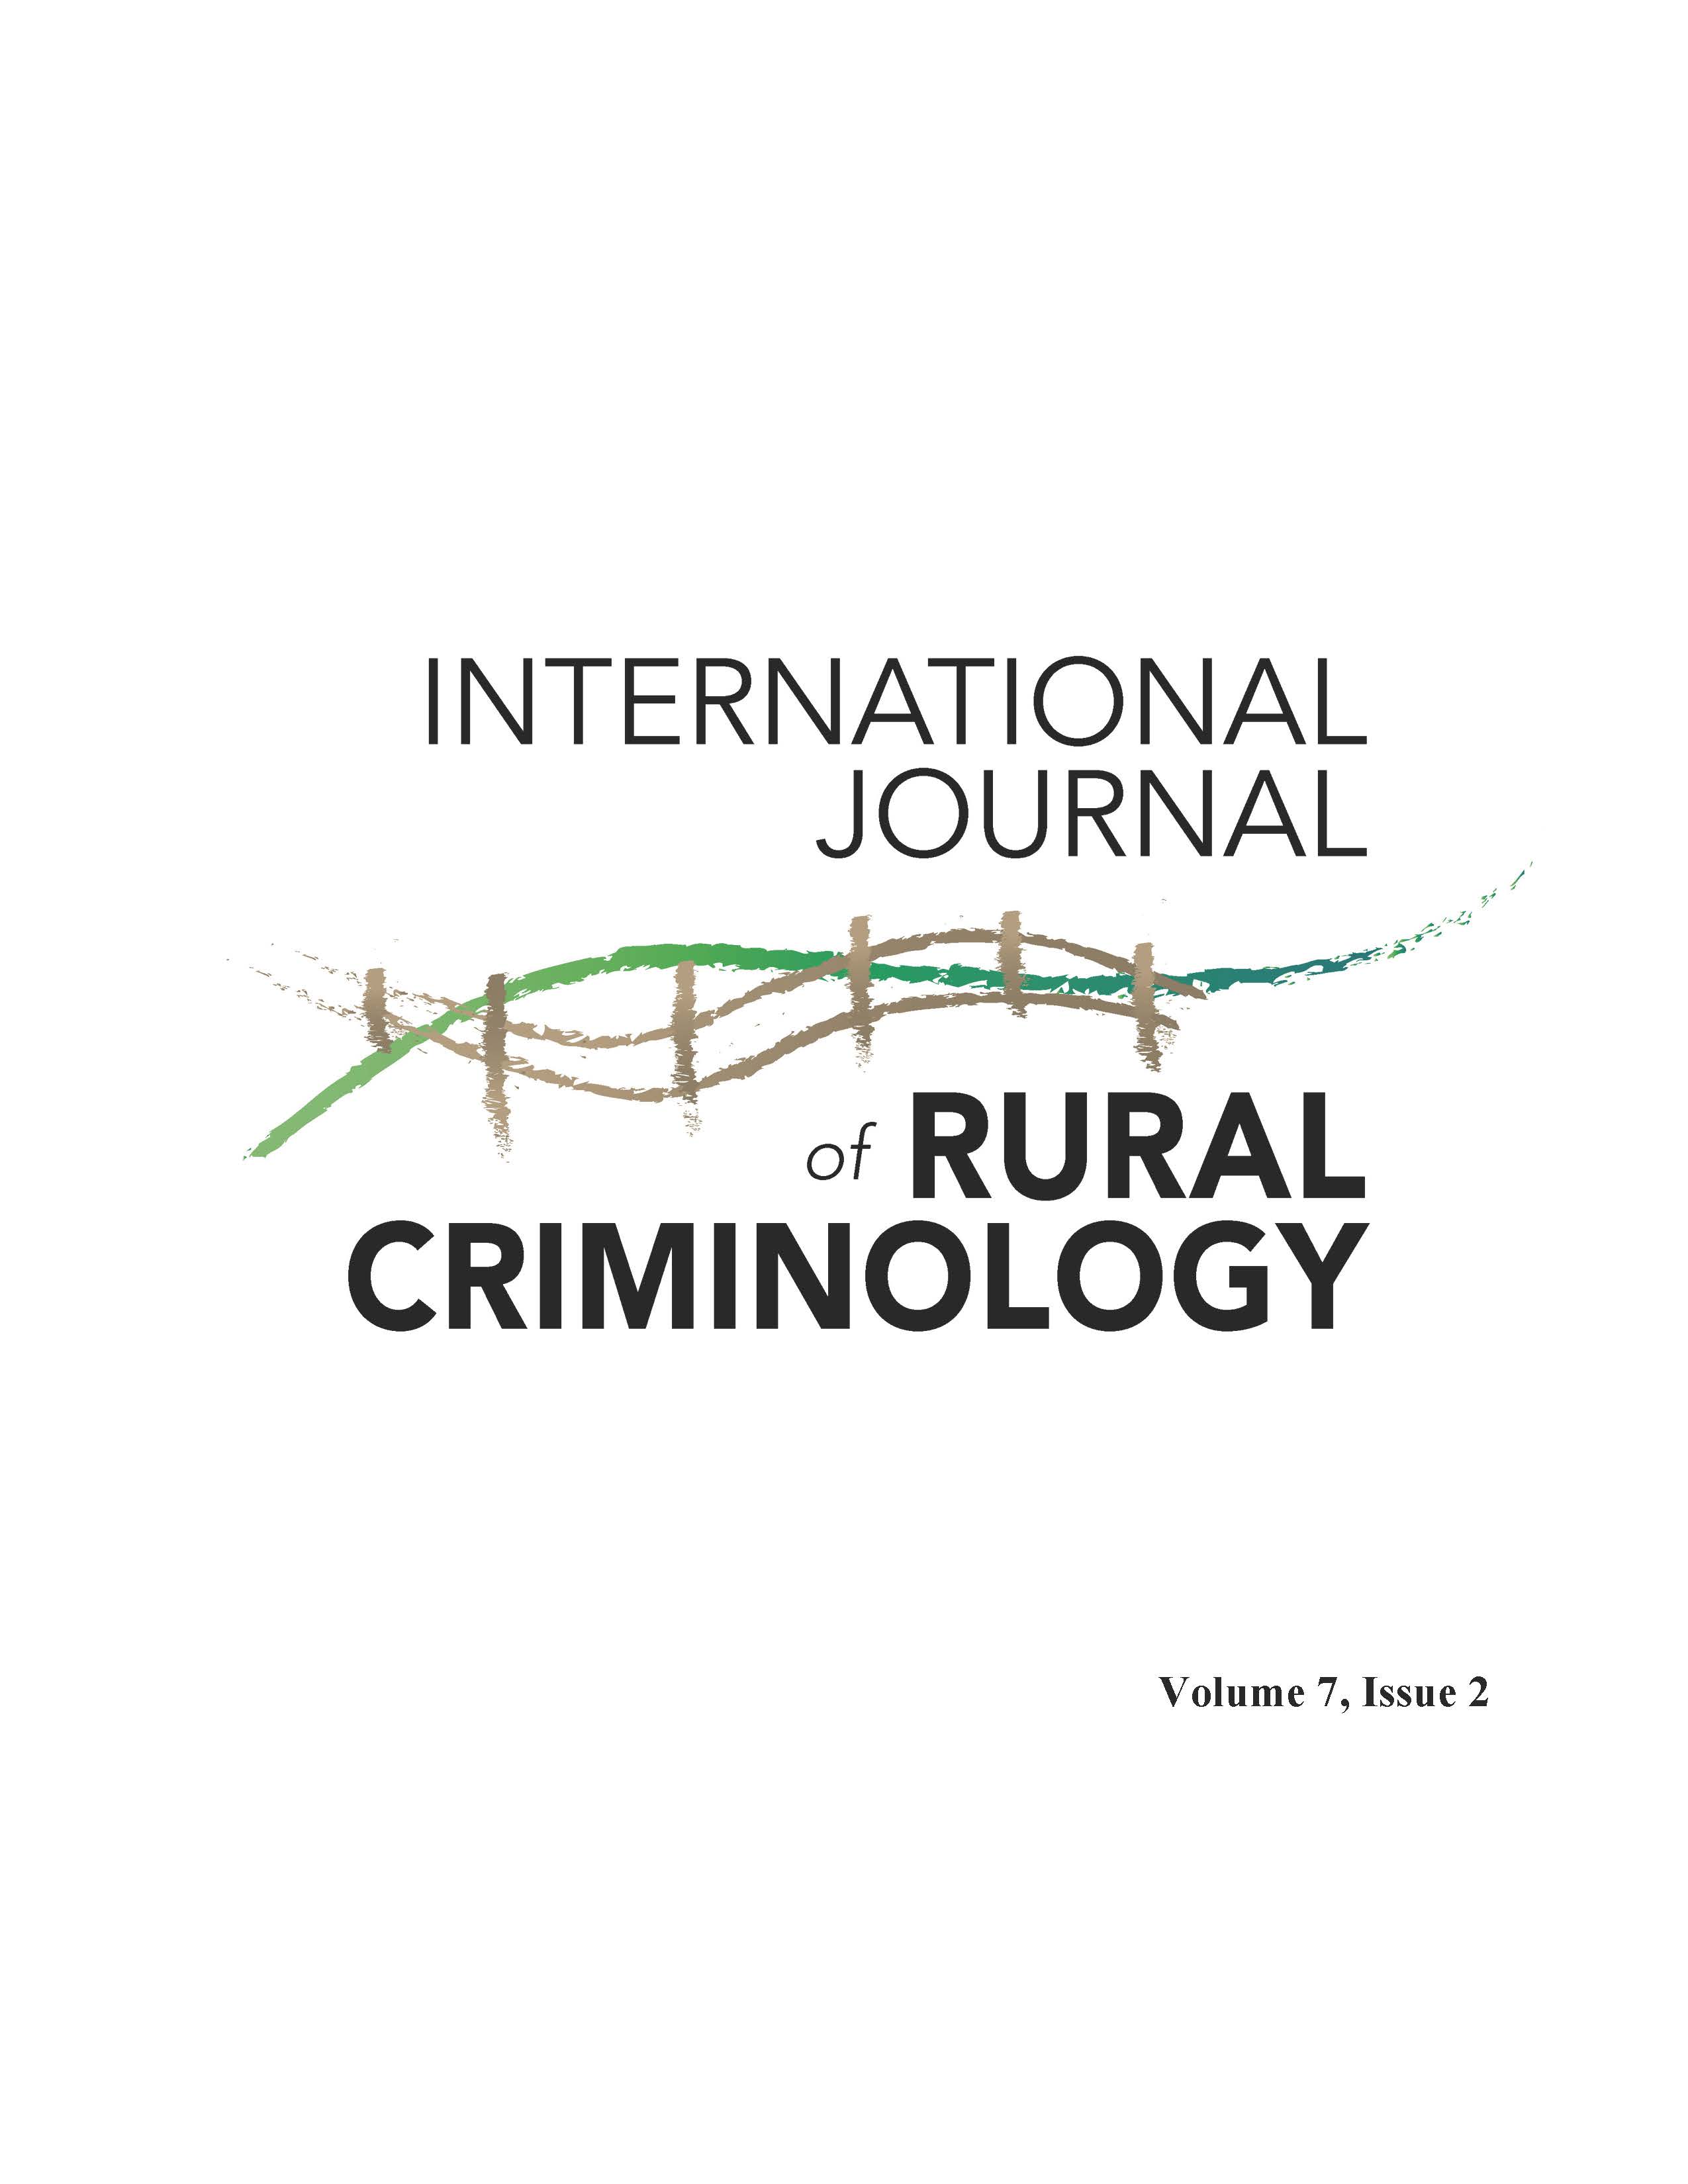 Cover image for the International Journal of Rural Criminology Volume 7, Number 2